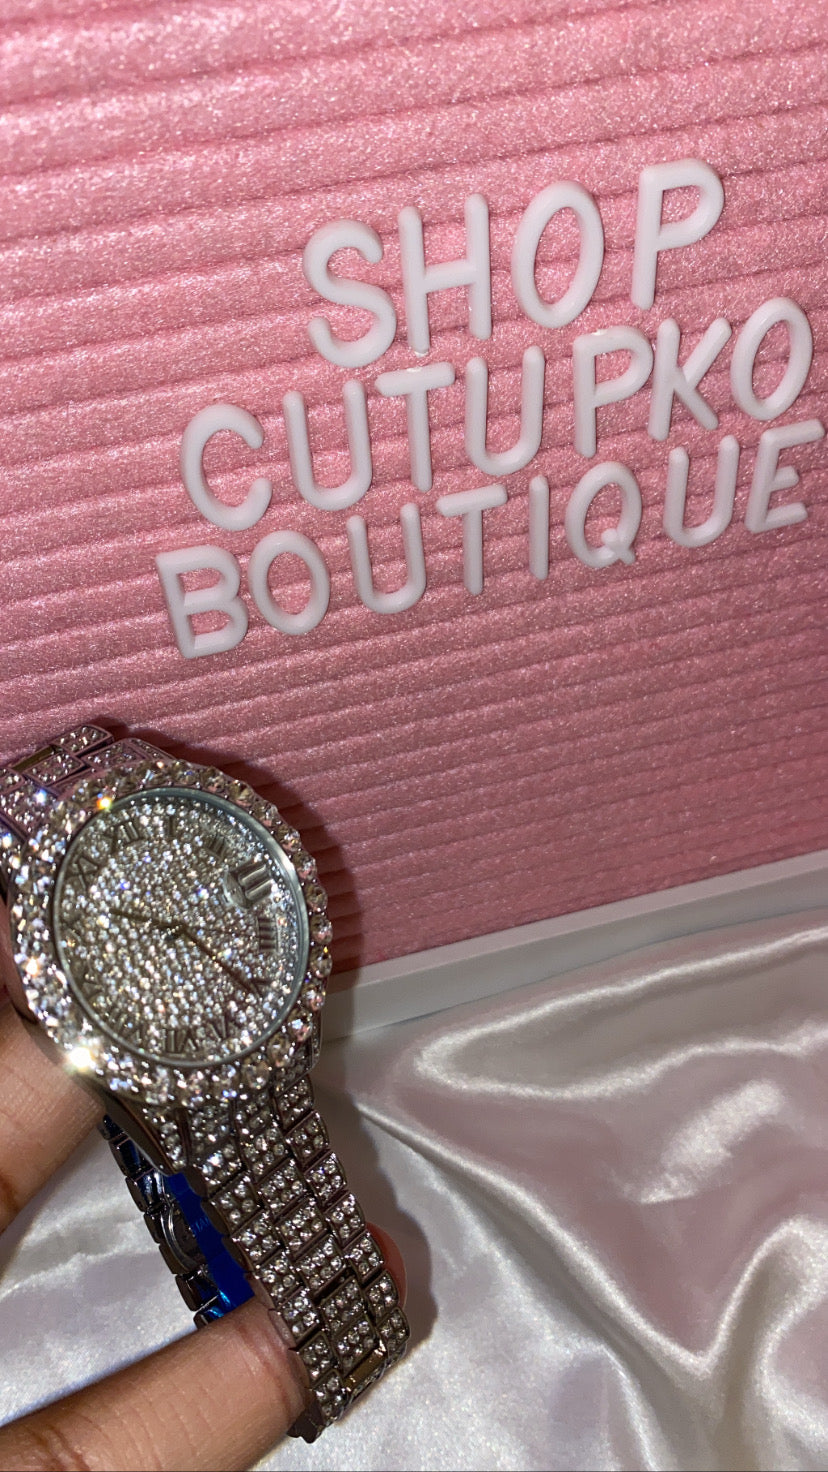 Cutupko Boutique